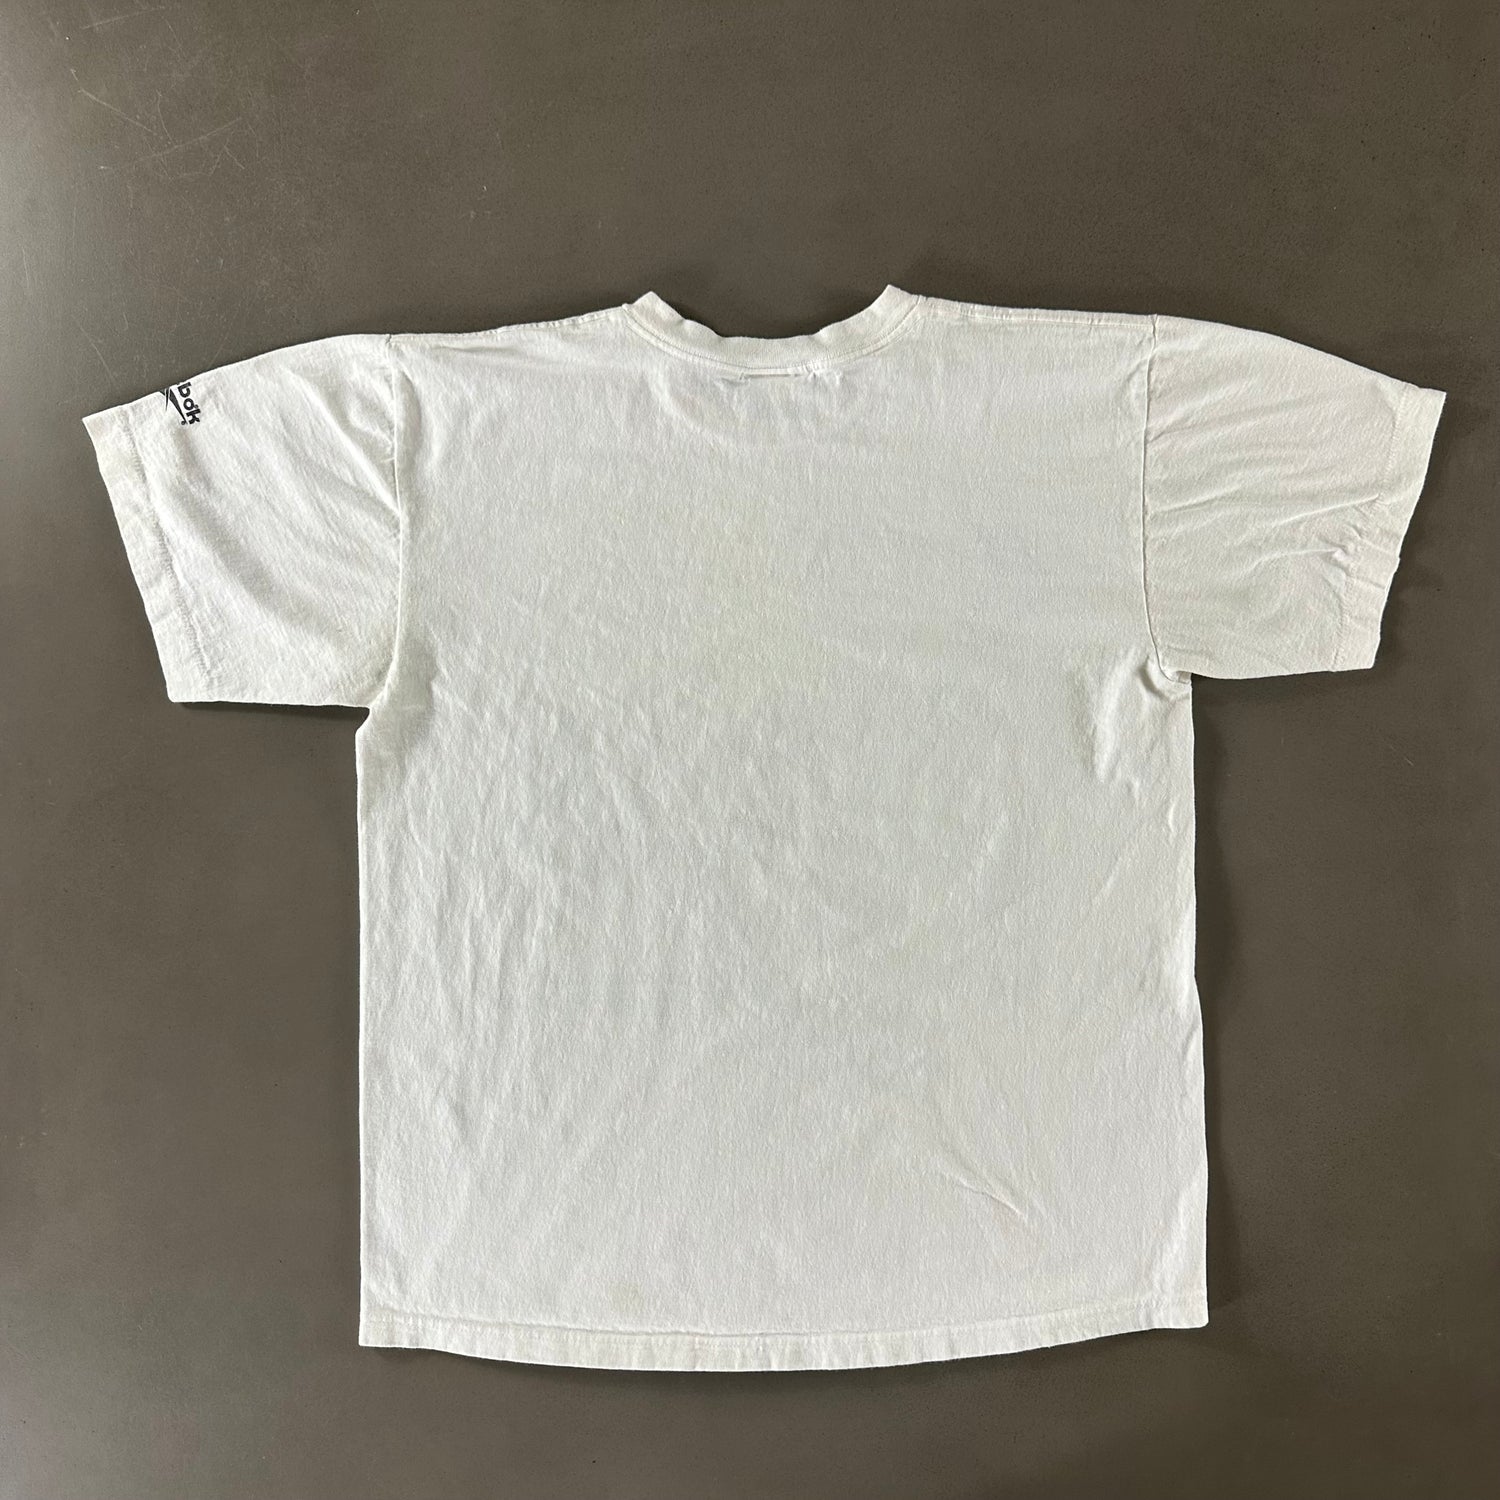 Vintage 1990s Reebok T-shirt size Large